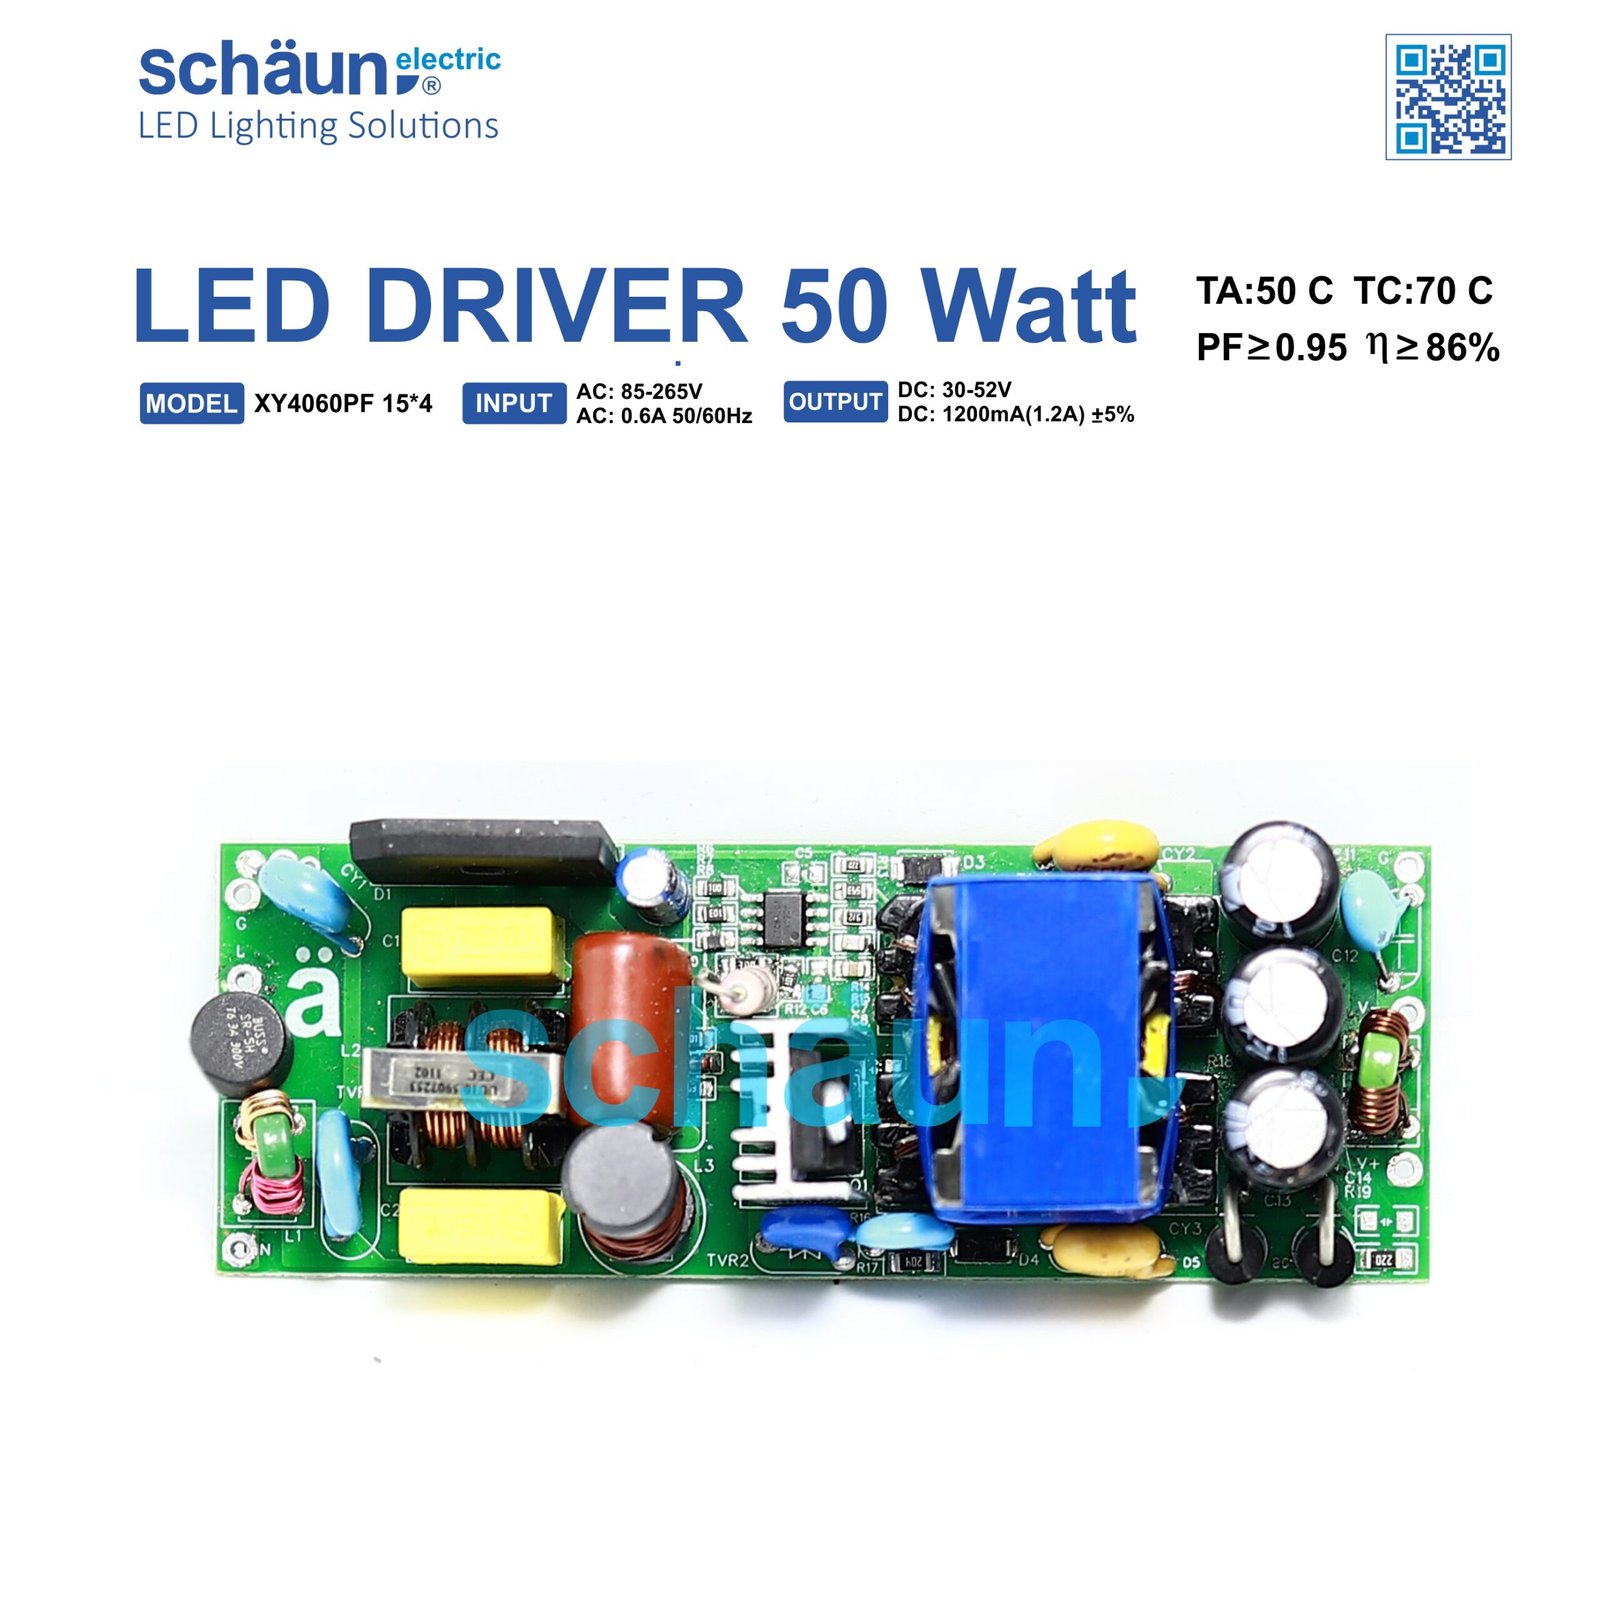 50 Watt LED Driver Price in Pakistan